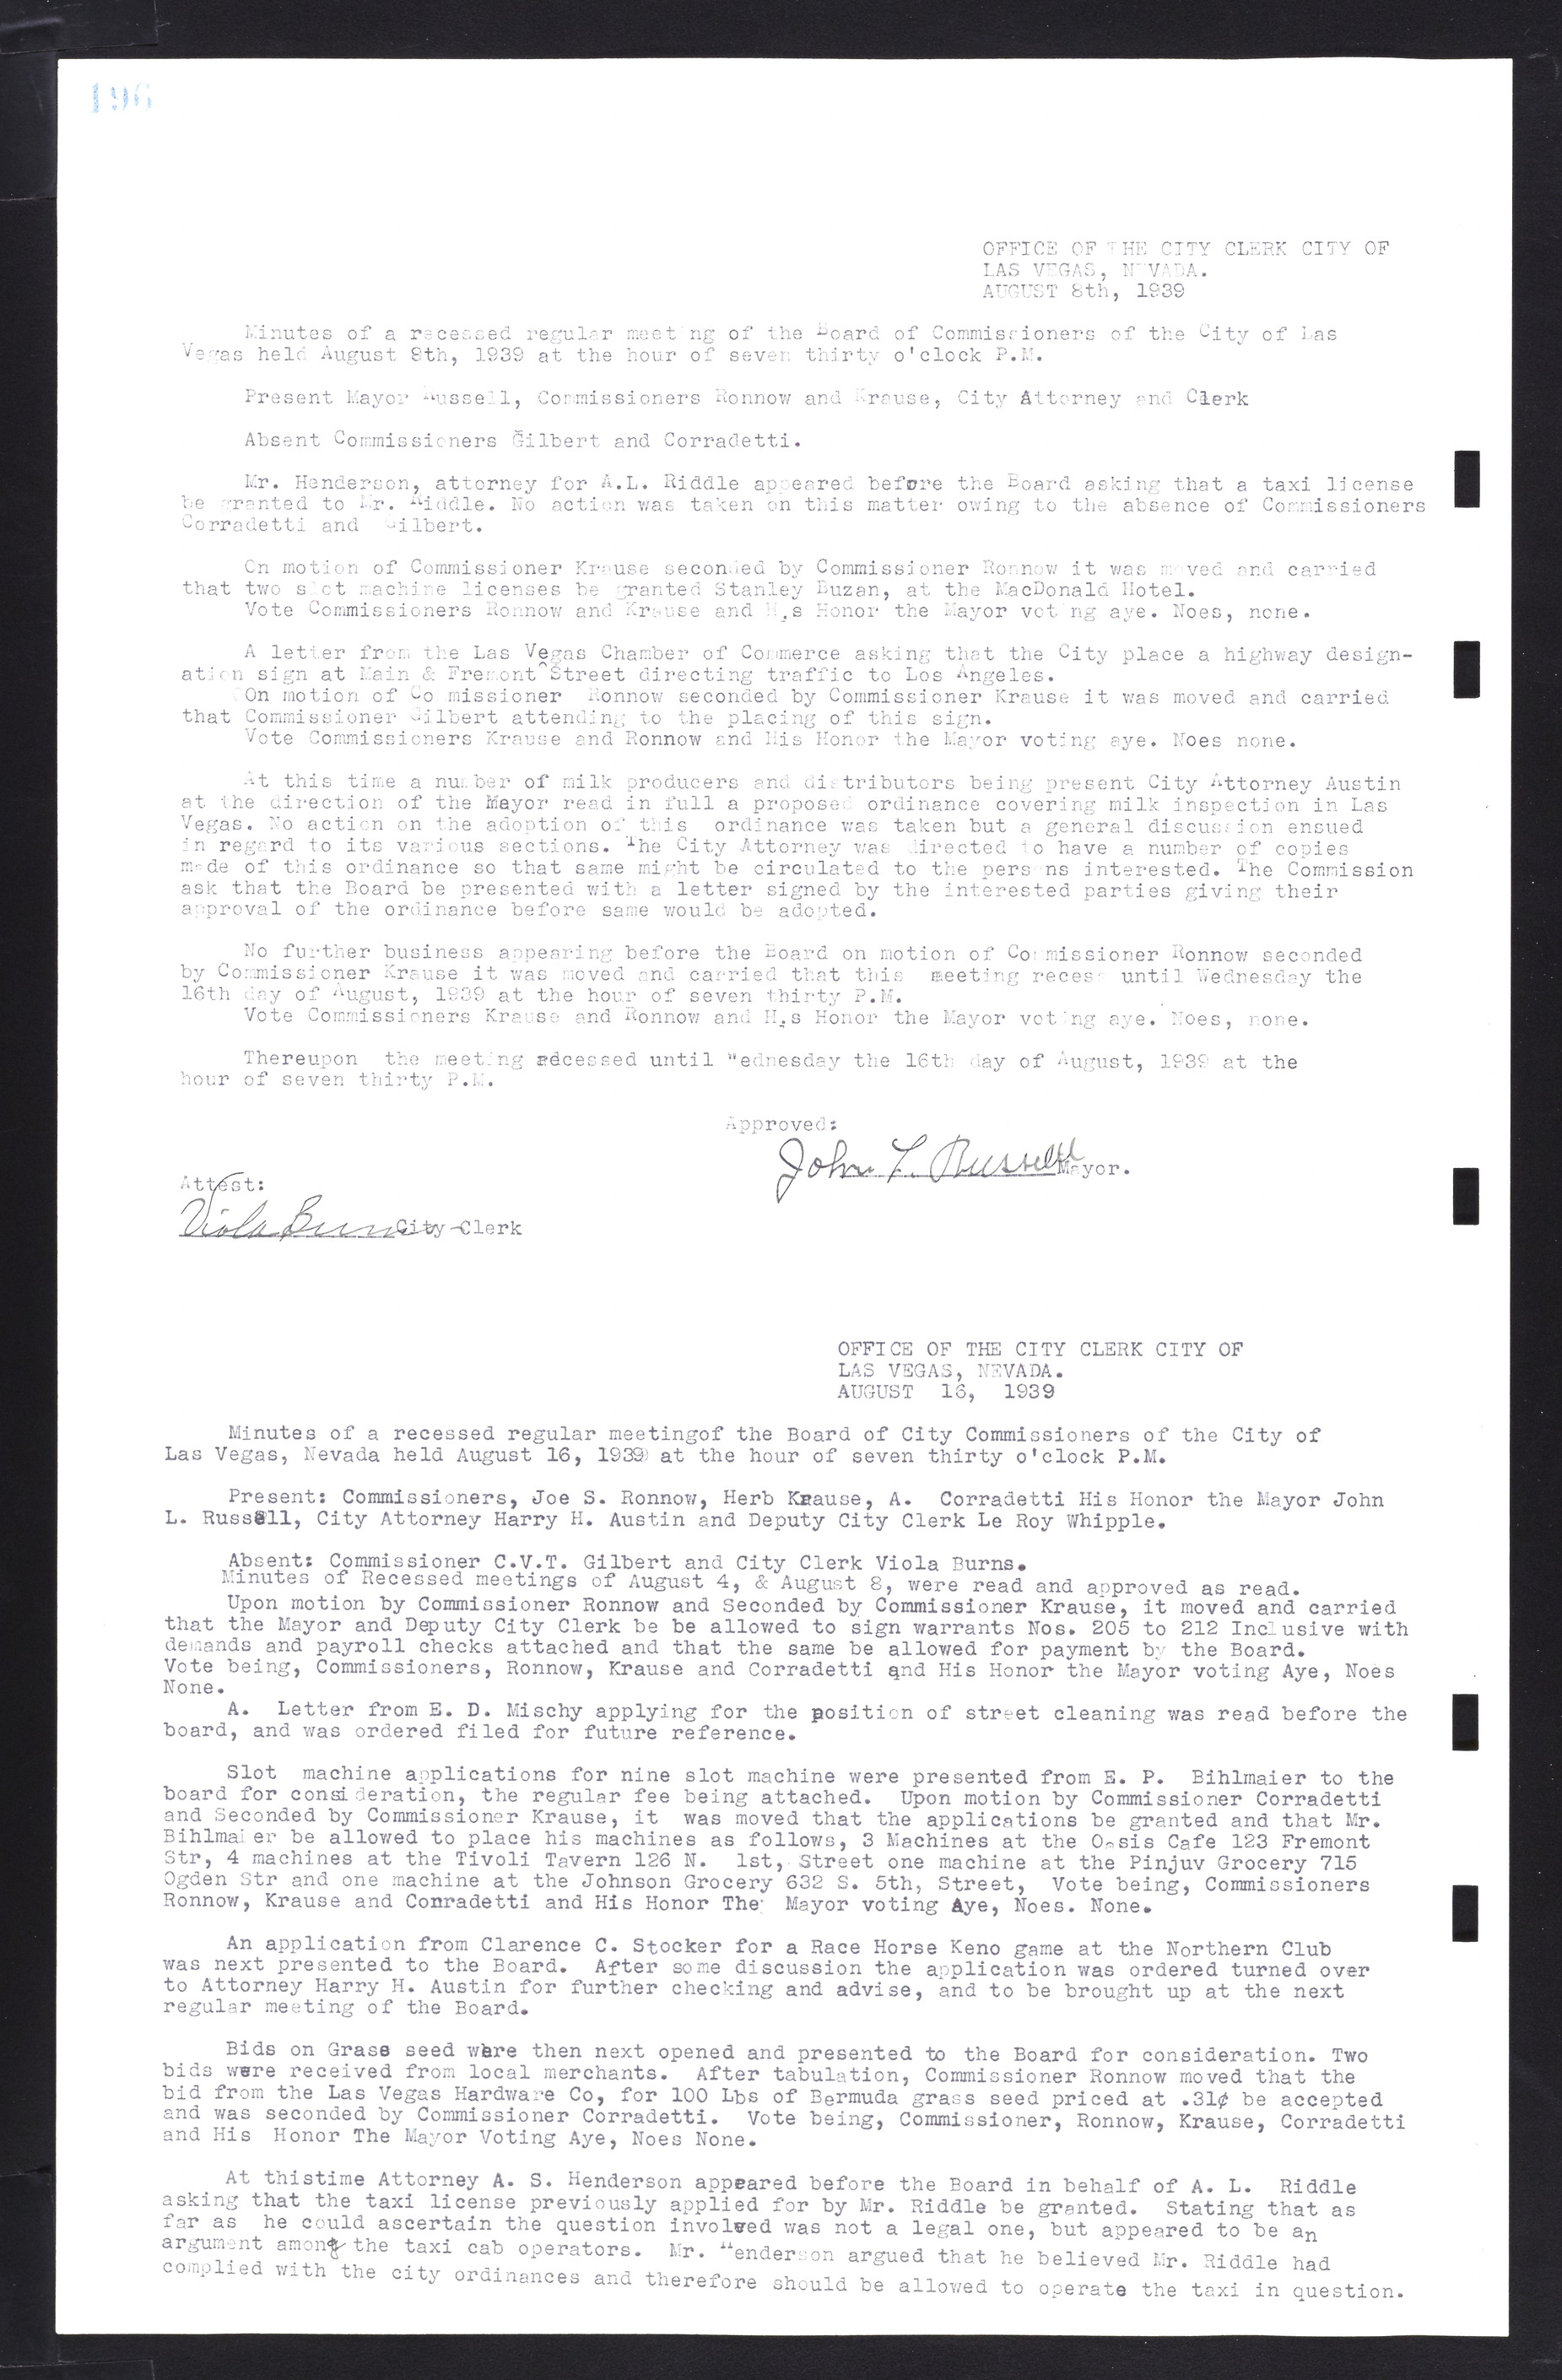 Las Vegas City Commission Minutes, February 17, 1937 to August 4, 1942, lvc000004-214